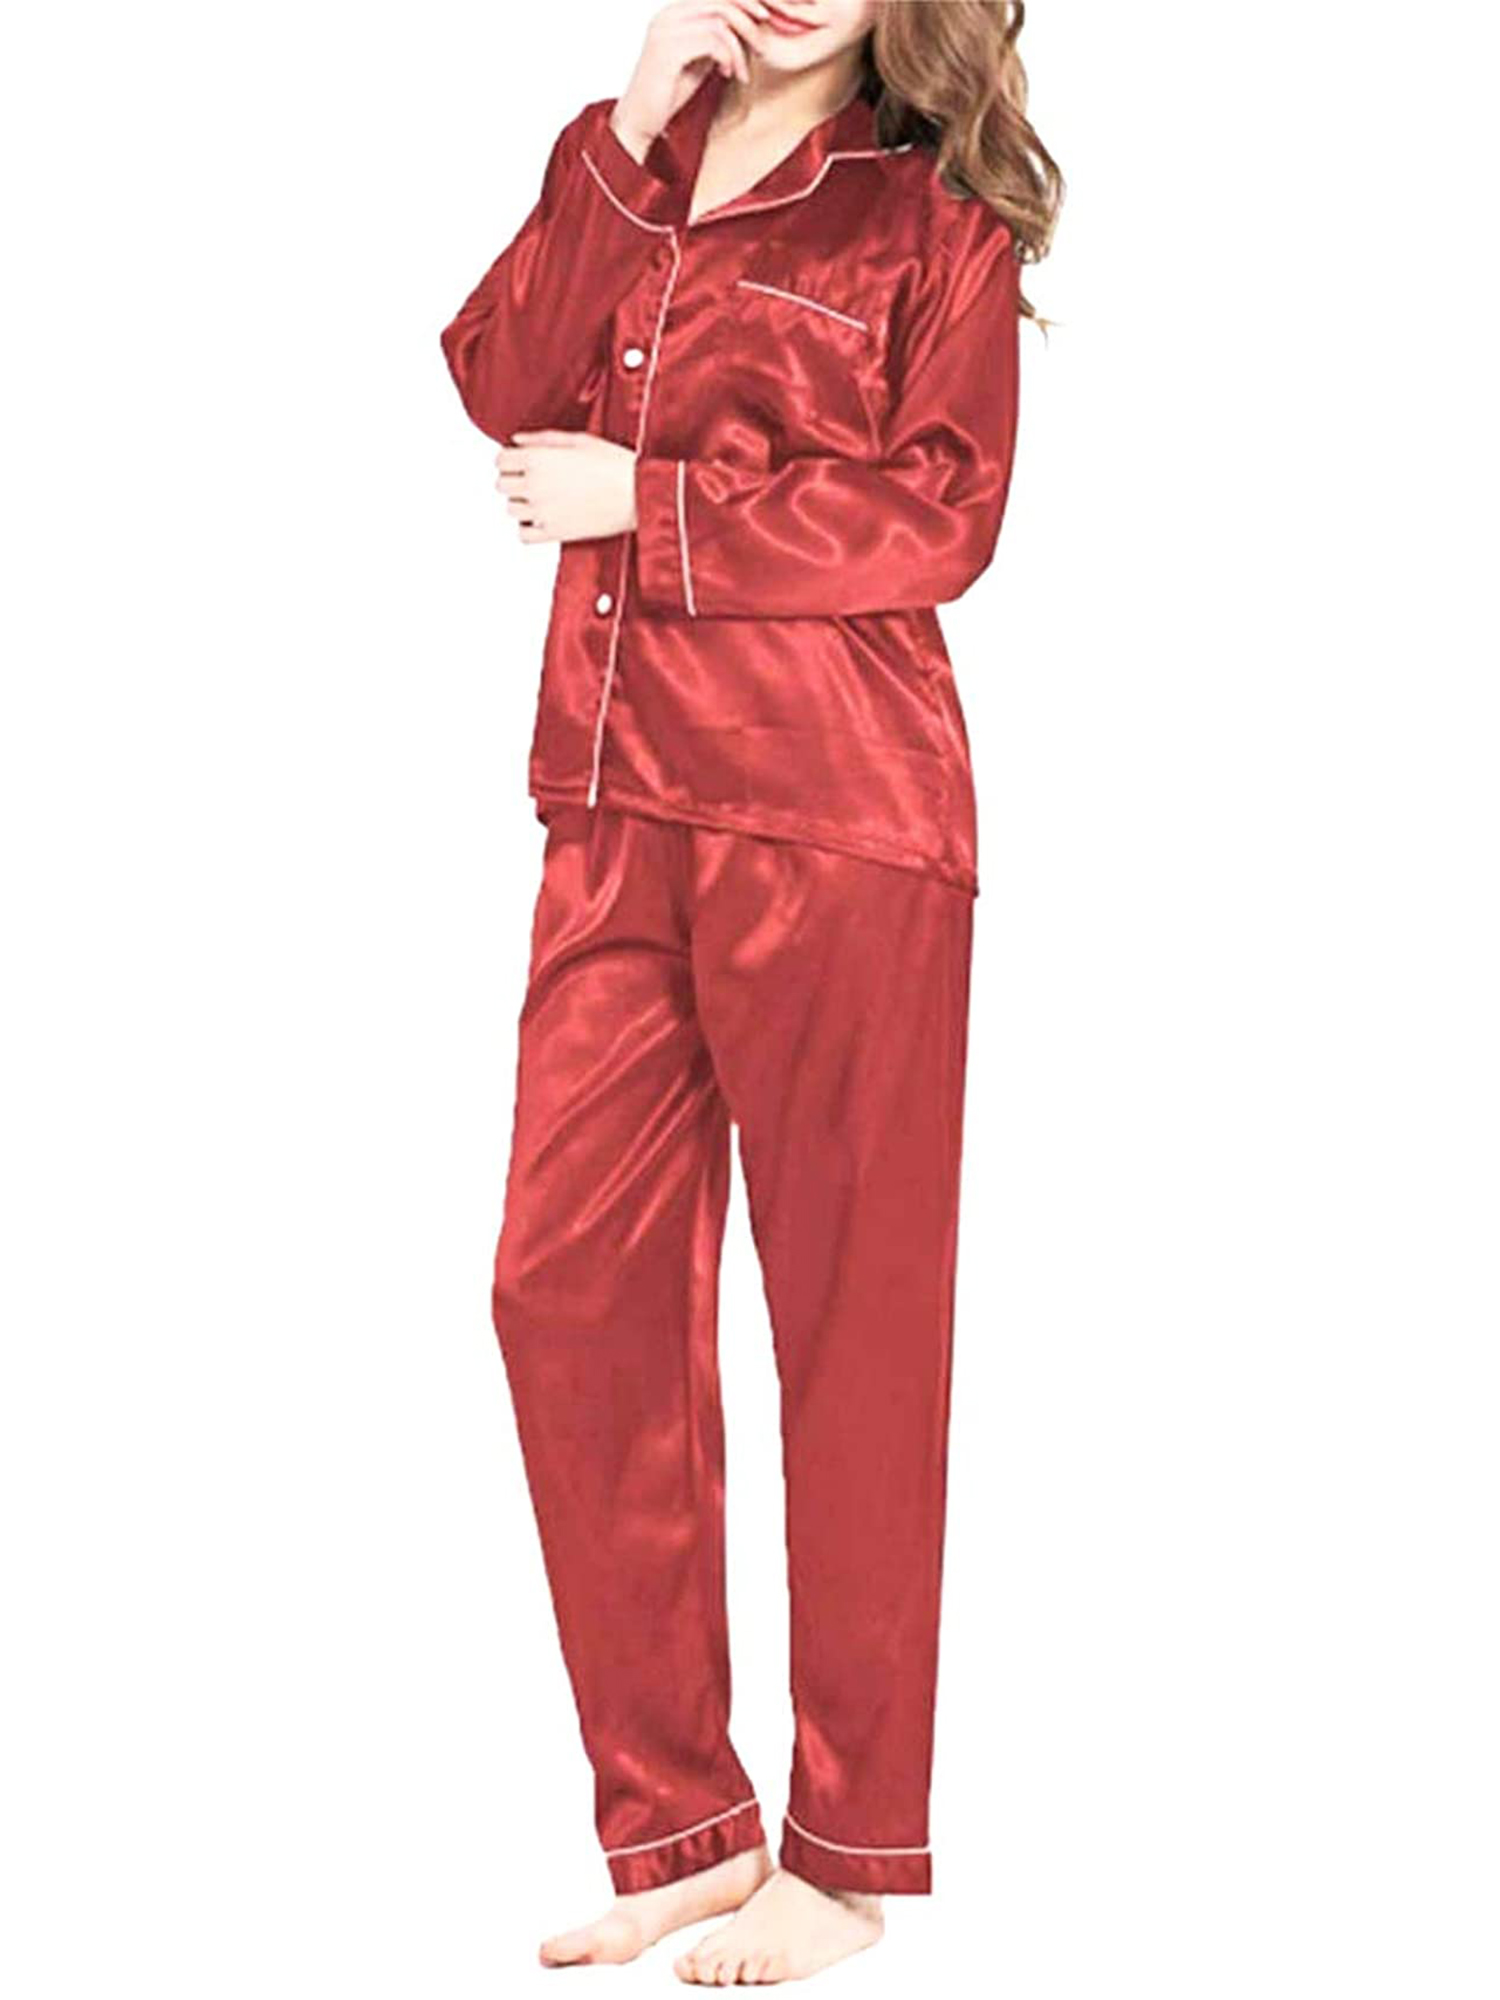 EYIIYE Women Silk Satin Button Long Sleeve Pajamas Pyjamas Loungewear Sleepwear Sets S-XL - image 1 of 7